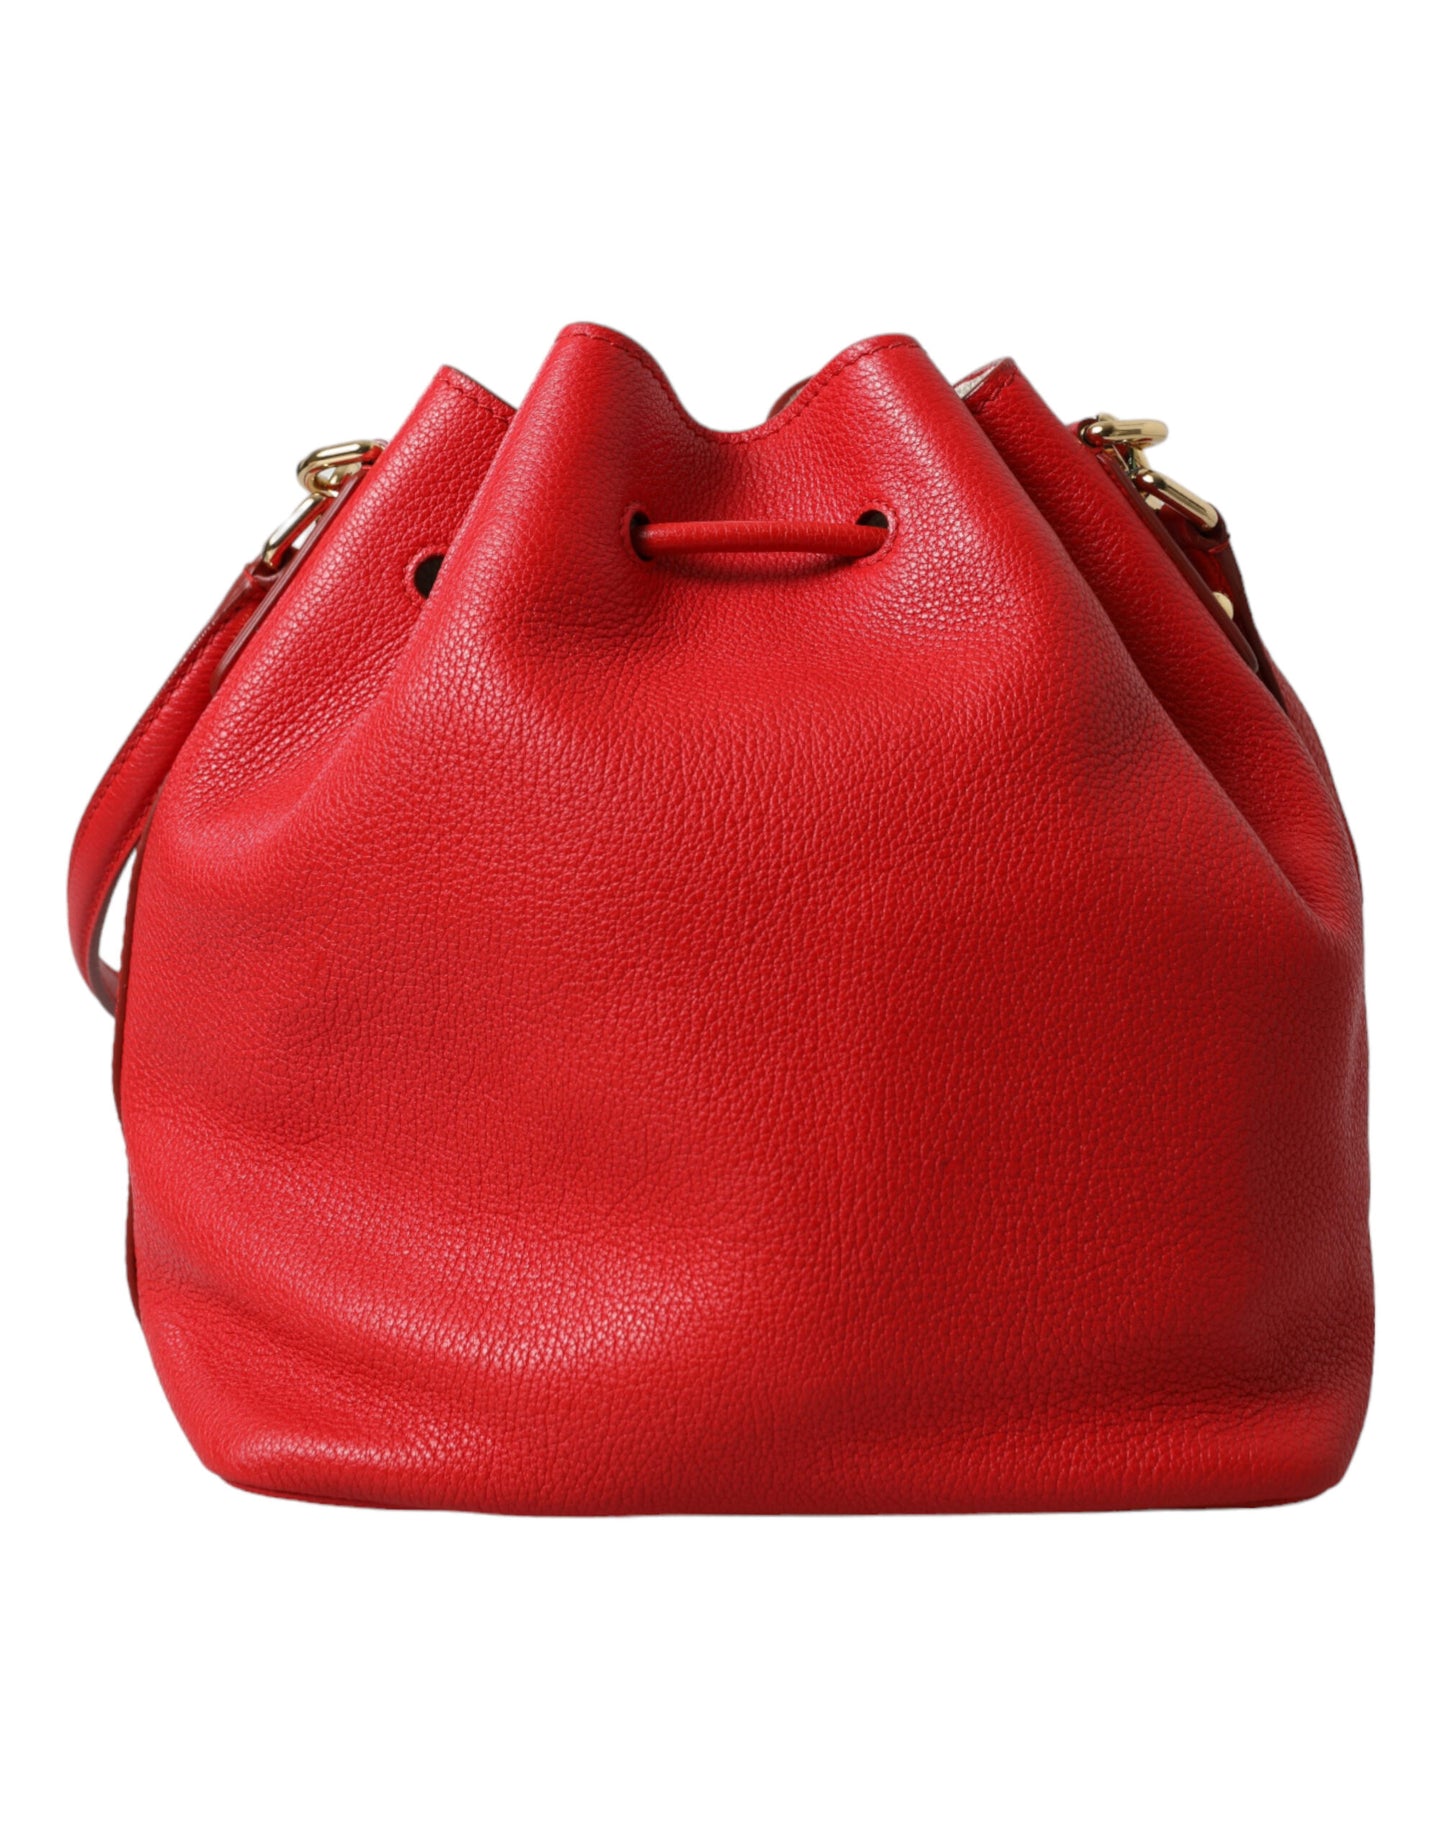 Elegant Red Leather Drawstring Bag with Gold Detailing